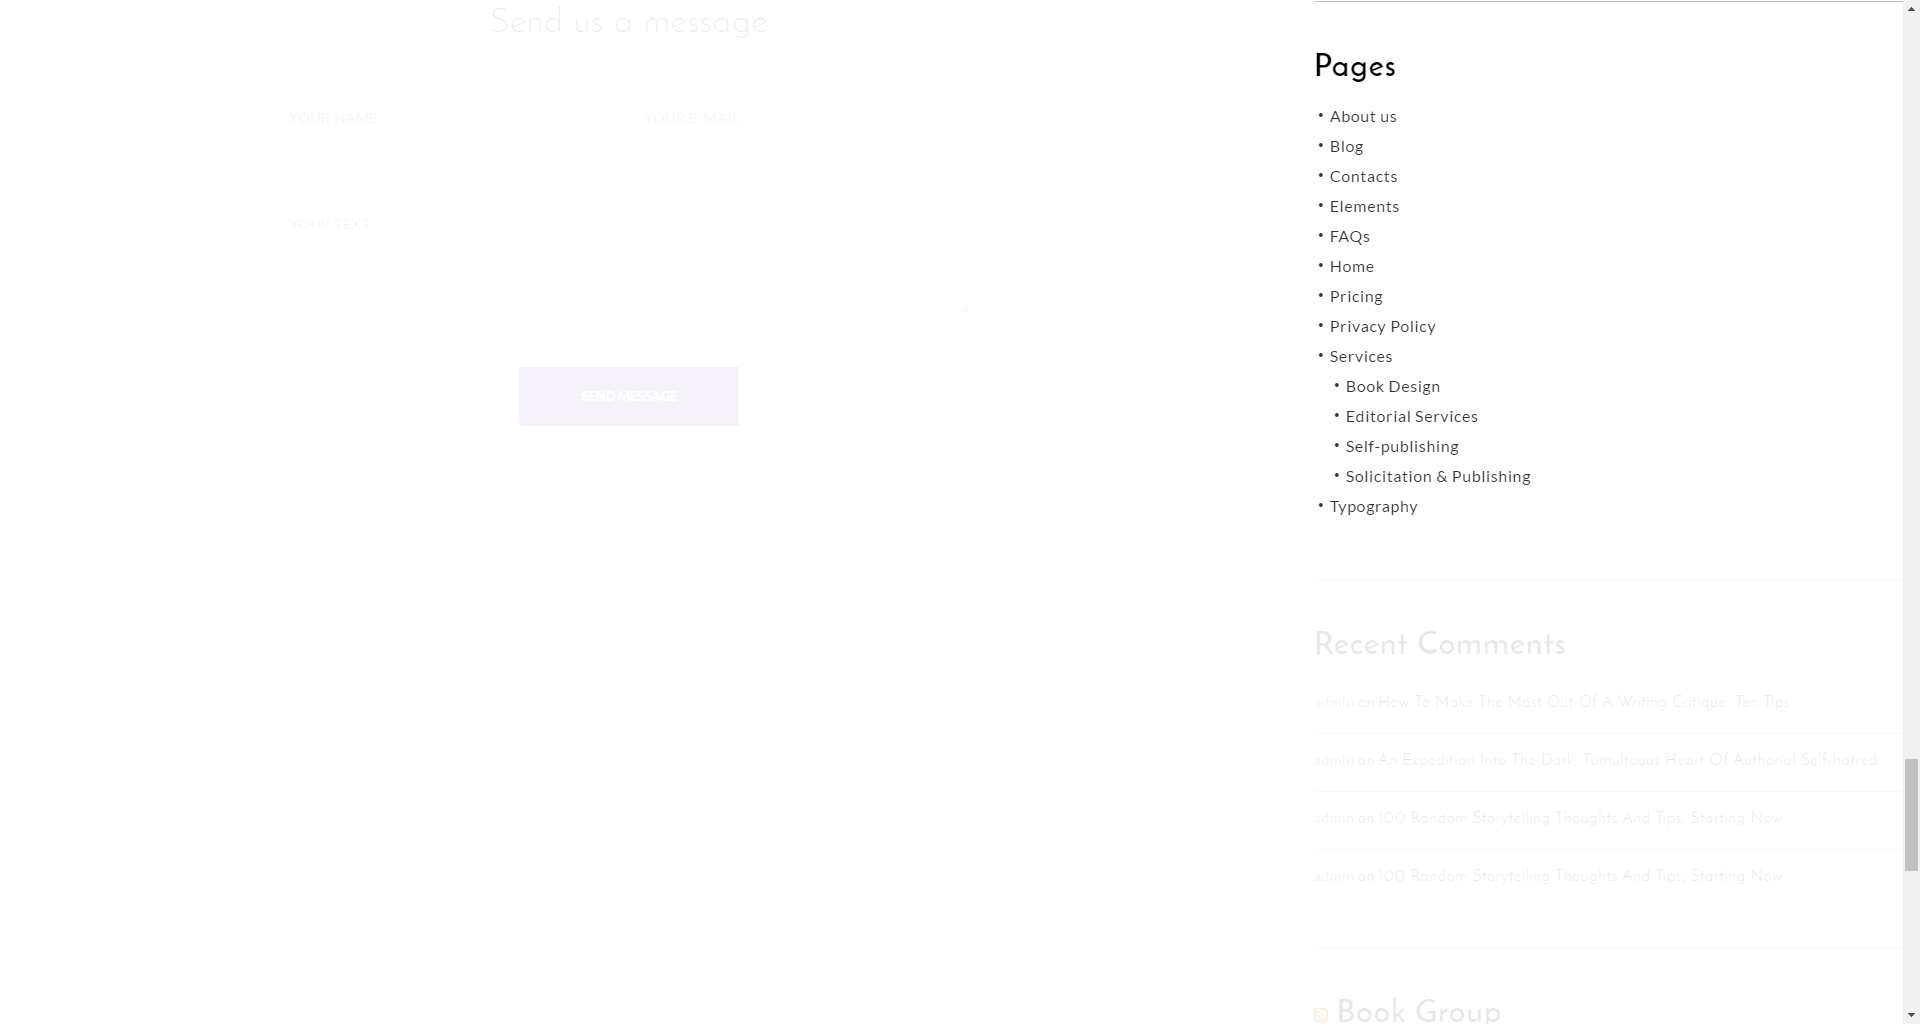 Pages widget